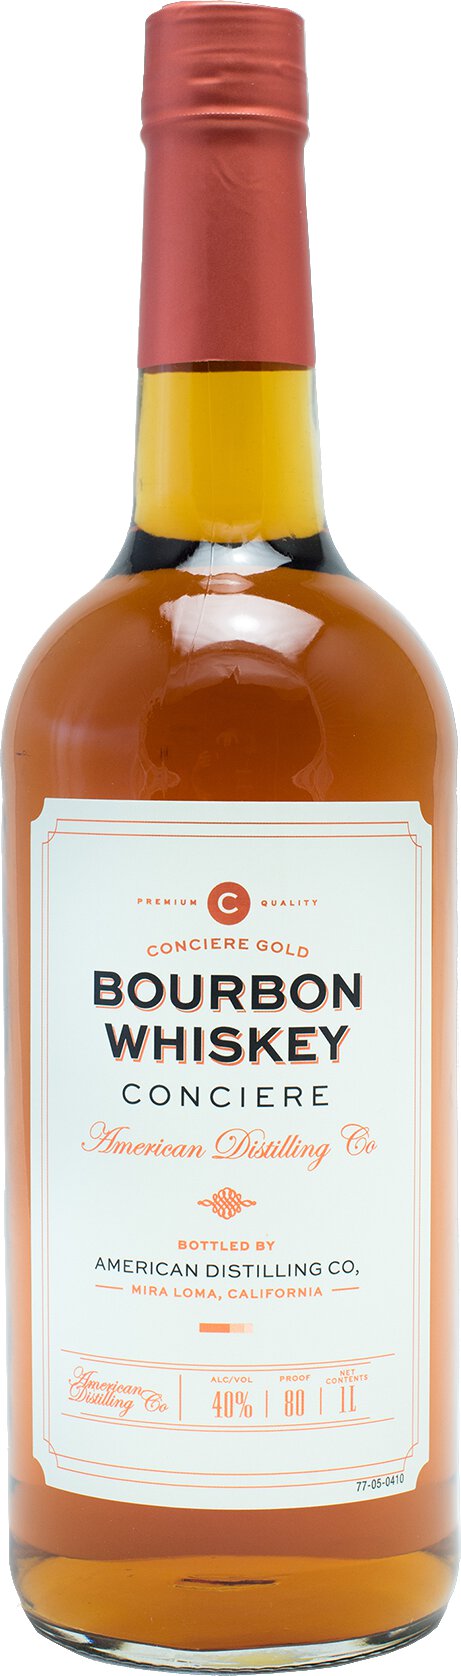 Conciere Bourbon Whiskey